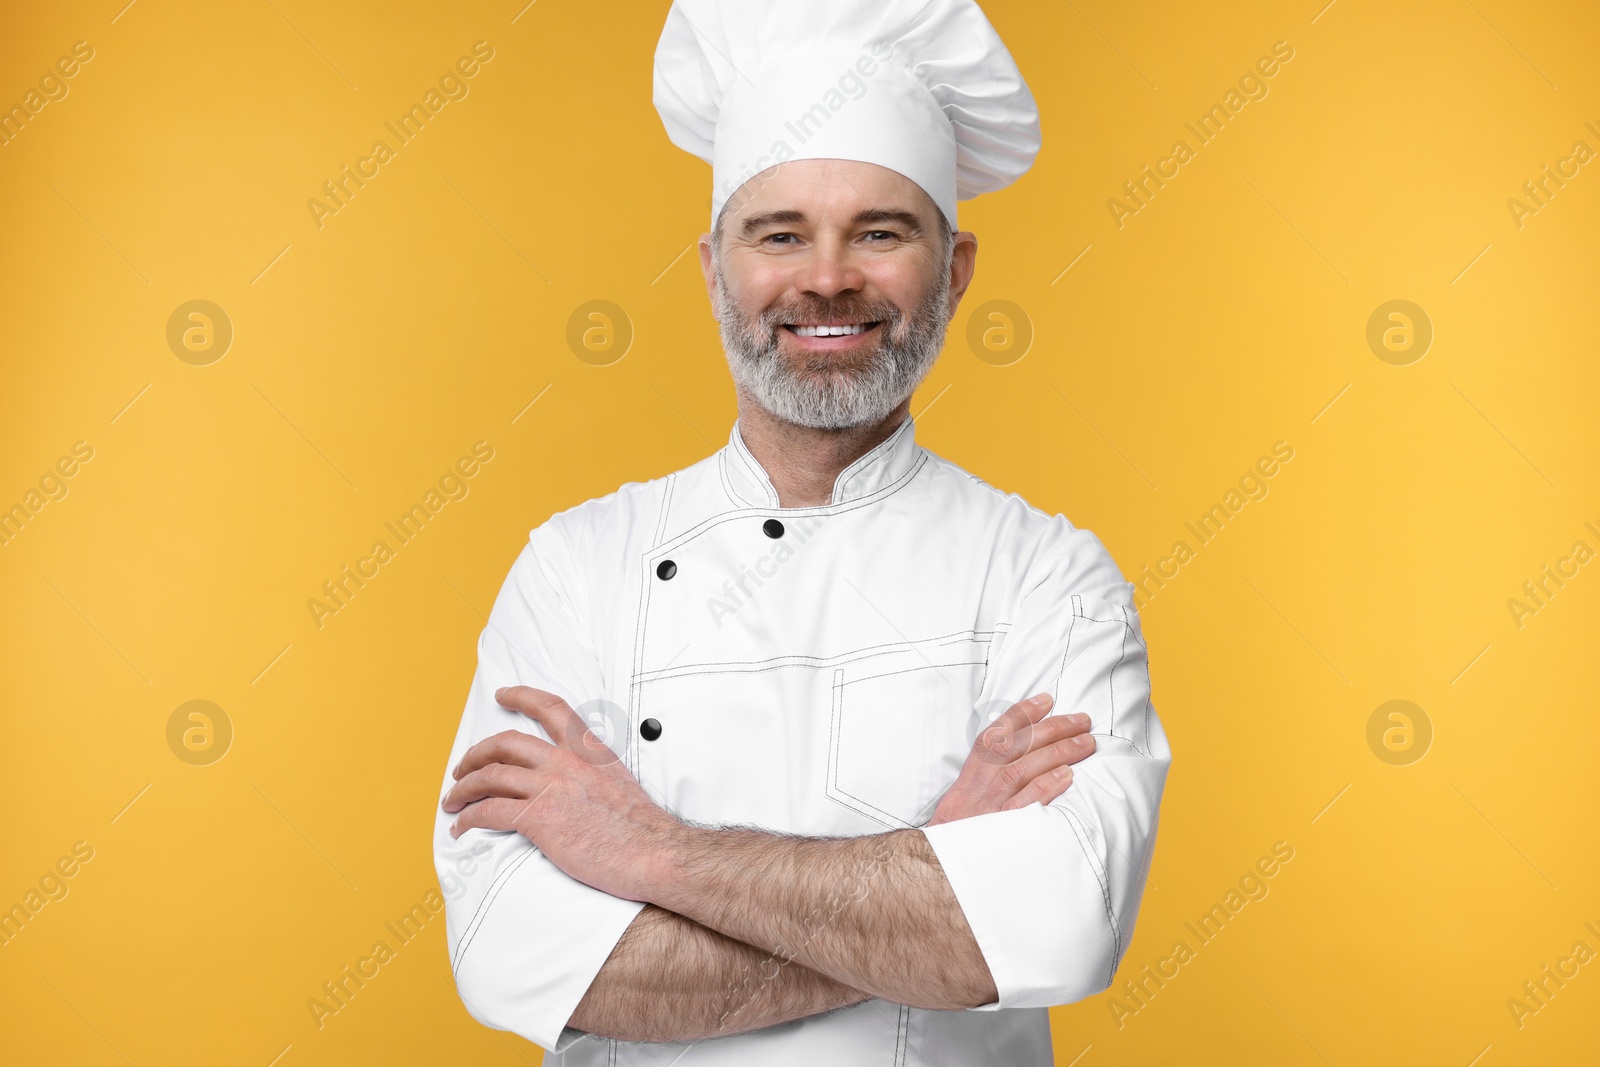 Photo of Happy chef in uniform on orange background